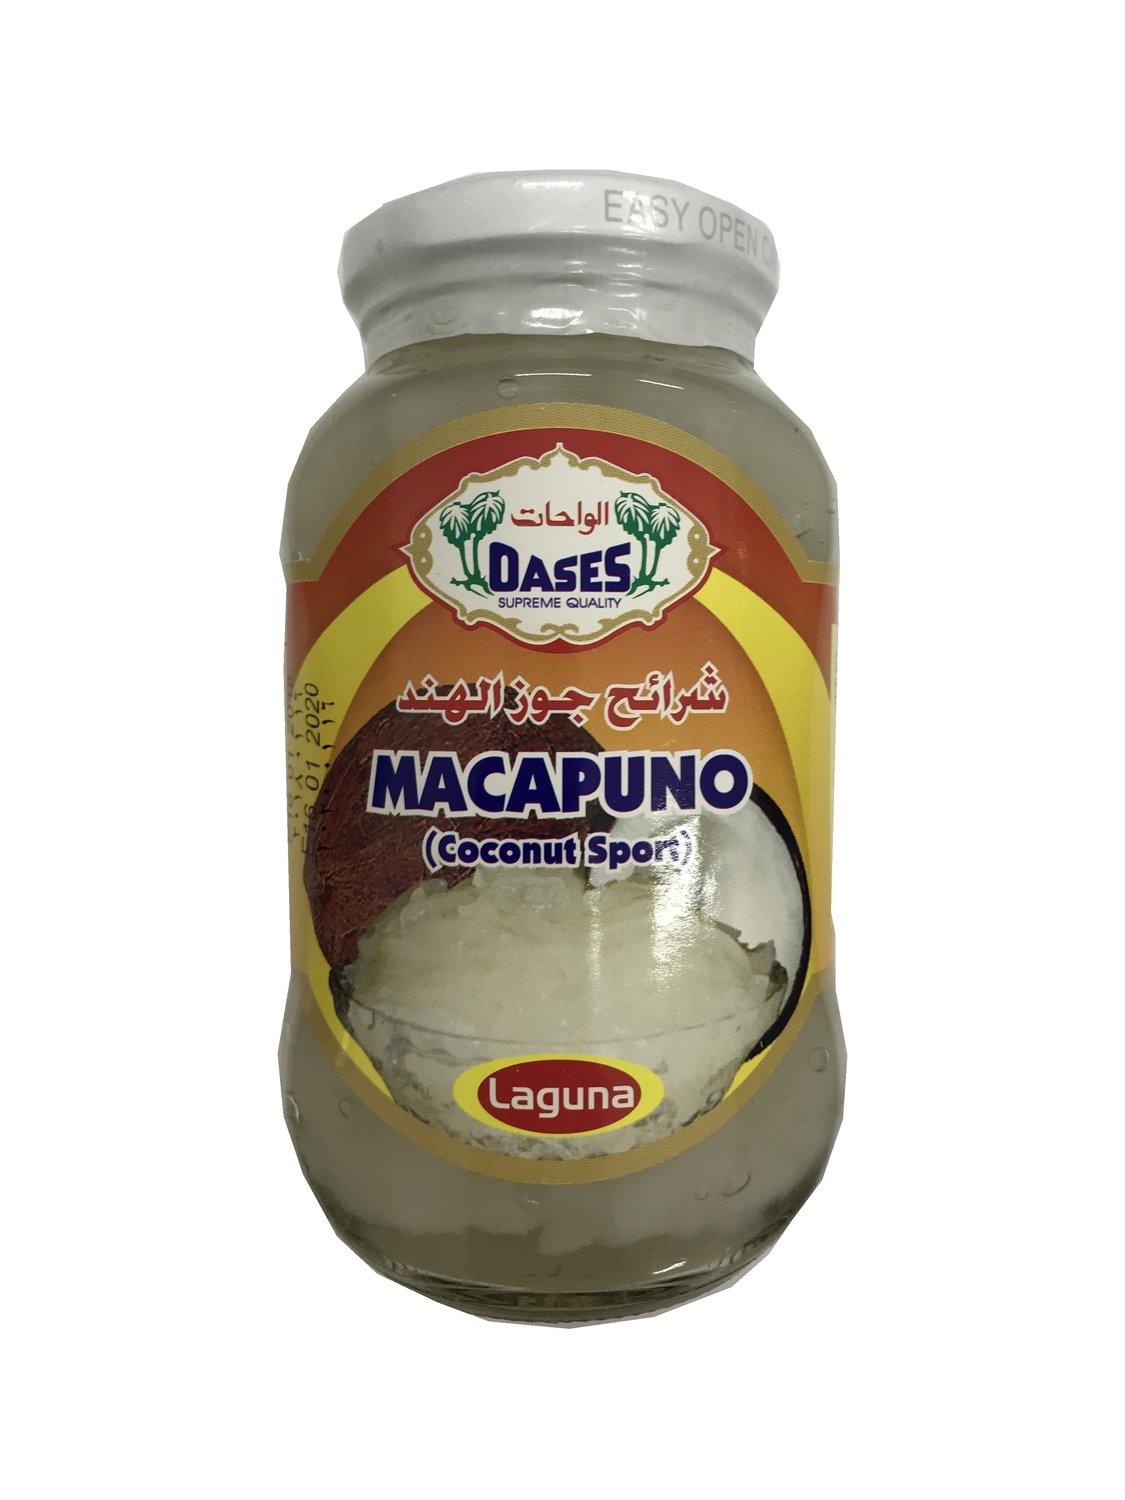 Oases Macapuno (Coconut Sport) 340g